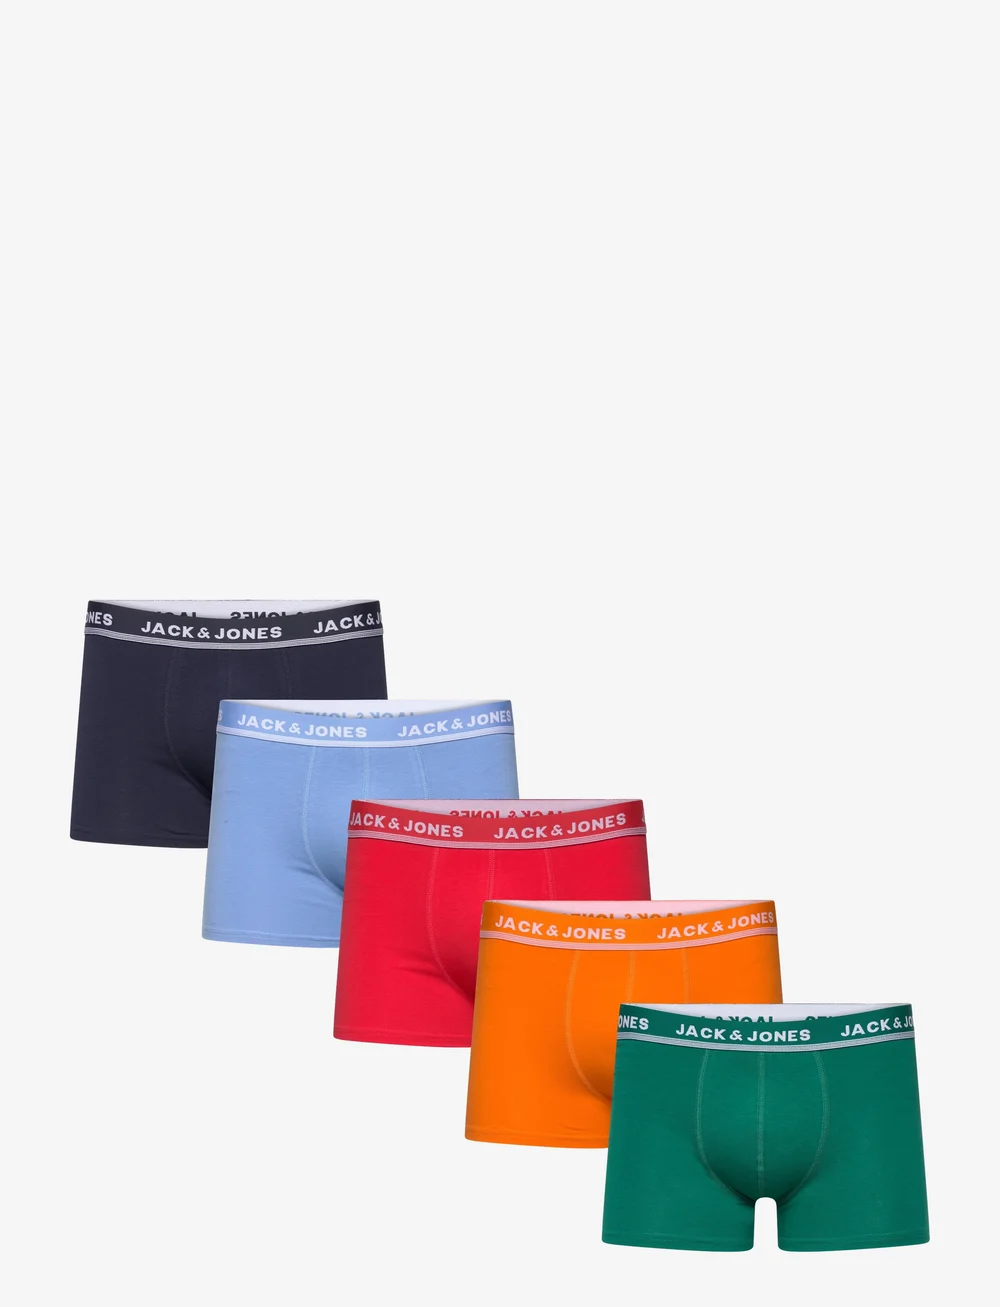 Jack & Jones Jaccolorful Kent Trunks 5 Pack – underpants – shop at Booztlet